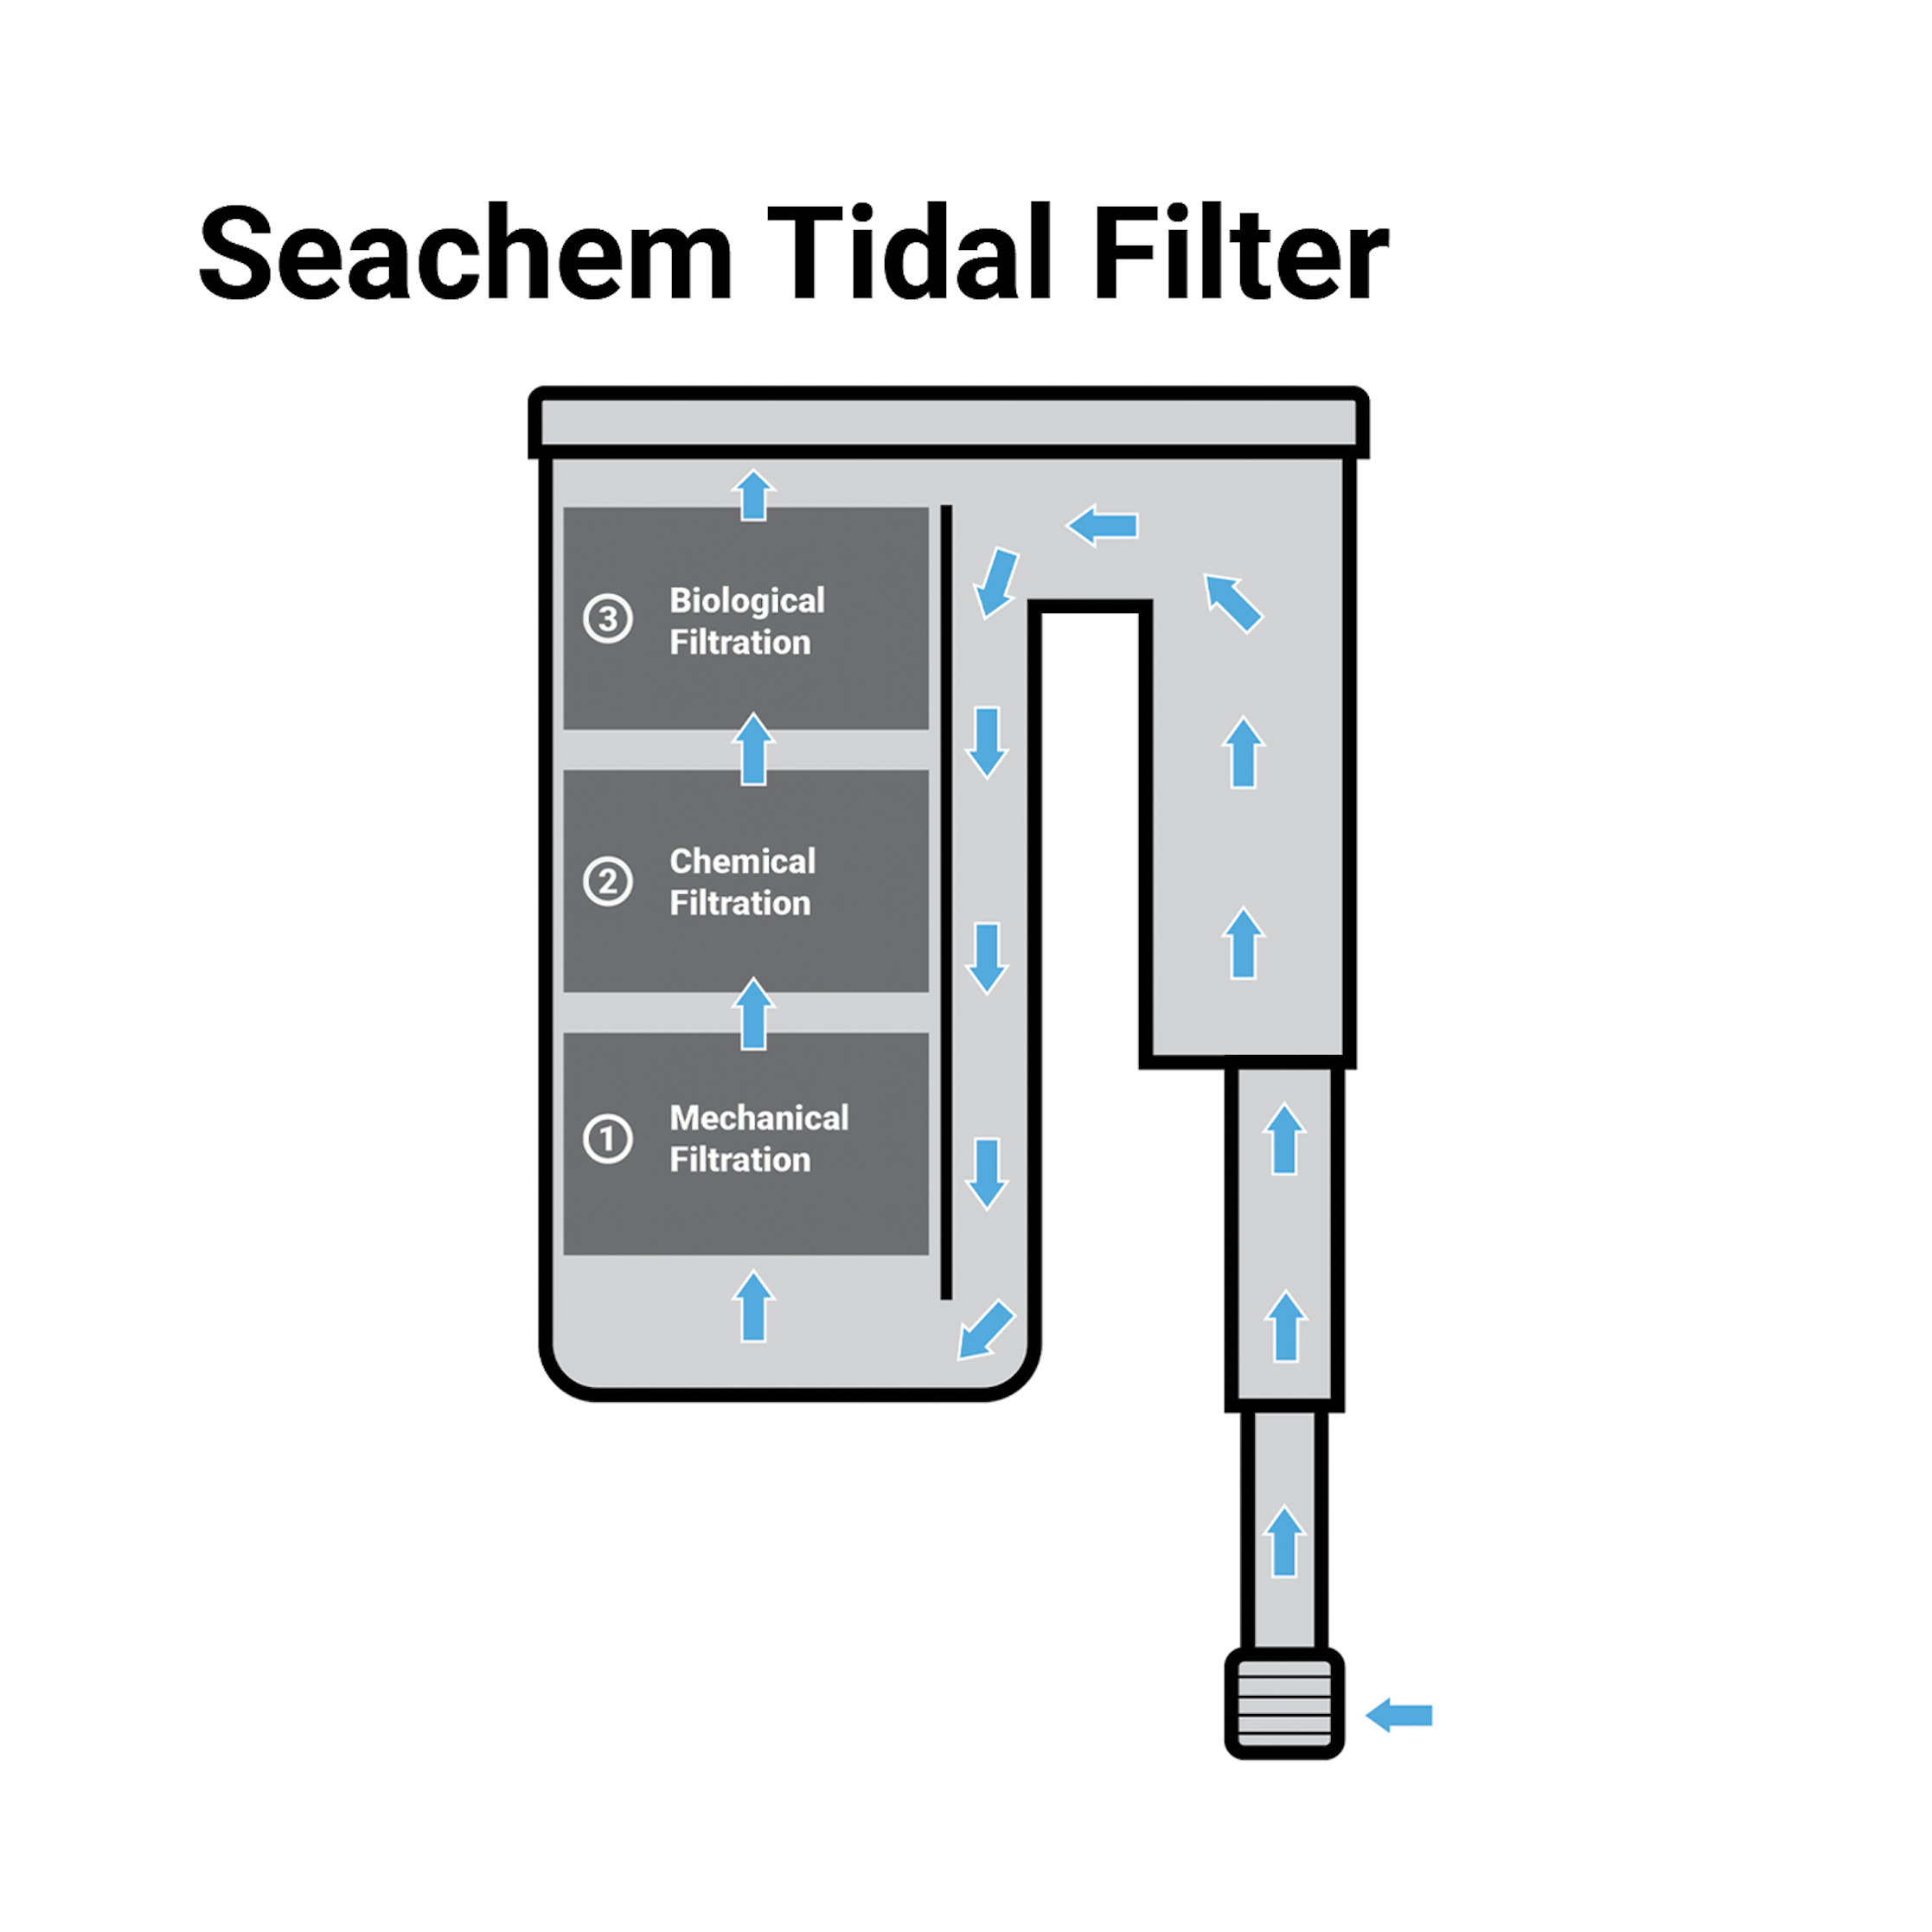 seachem filter 35